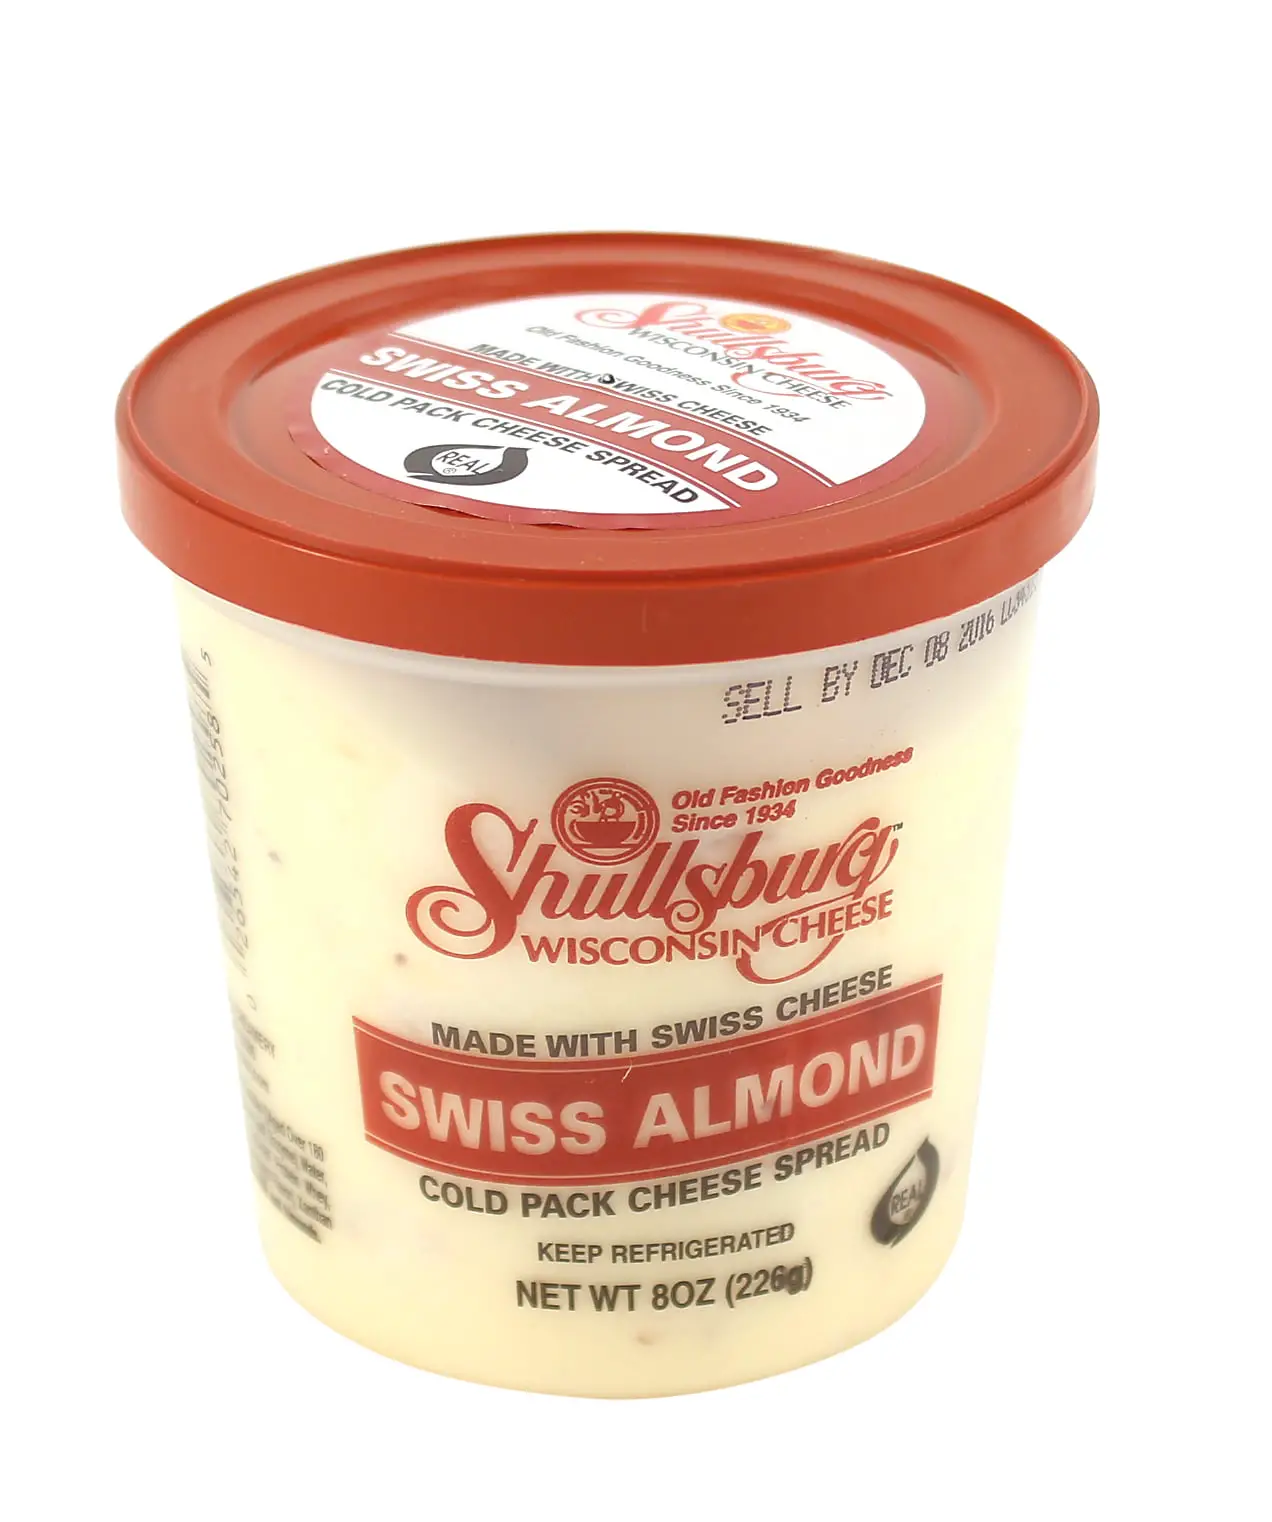 Shullsburg Swiss Almond Cold Pack Cheese Spread, 8 Oz.